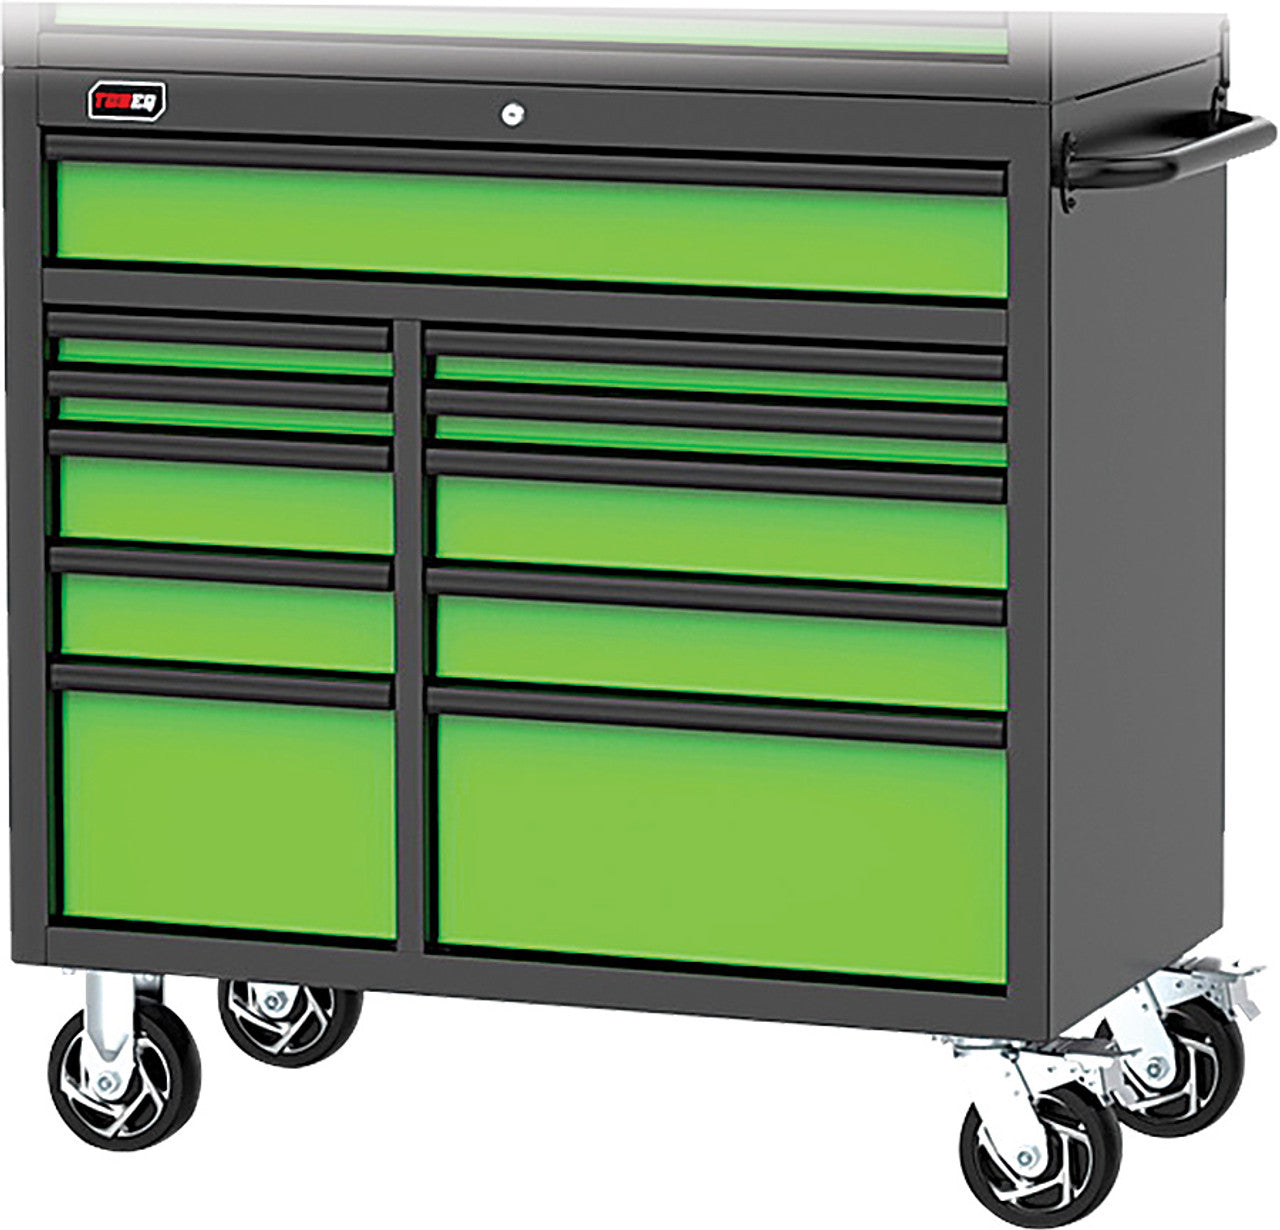 Tobeq RCBT411121LGBK-PROMO 41" Rolling Cabinet + FREE Tobeq TCBT410421LGBK 41" Top Chest (Lime Green/Black)